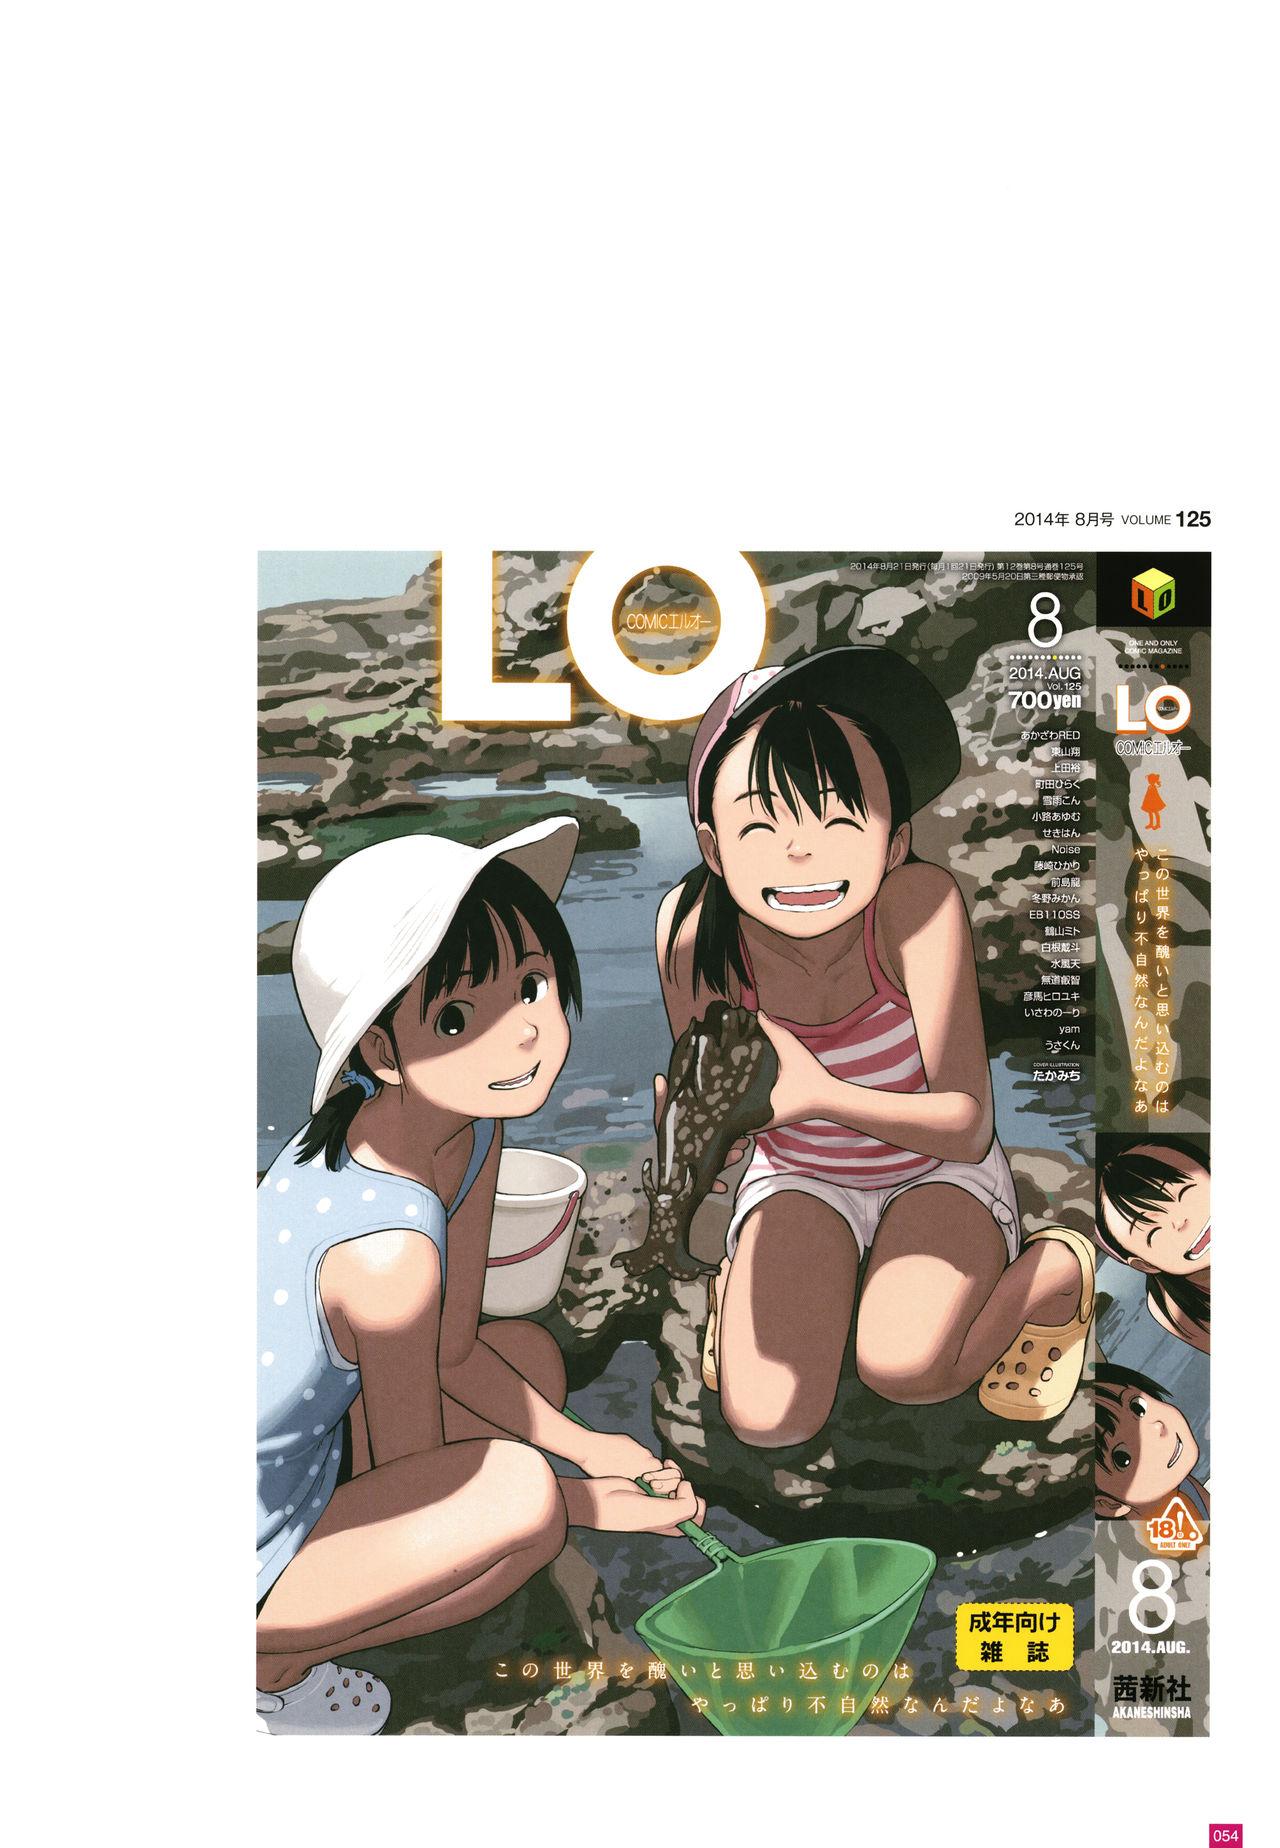 [Takamichi] LO Artbook 2-B TAKAMICHI LO-fi WORKS 56